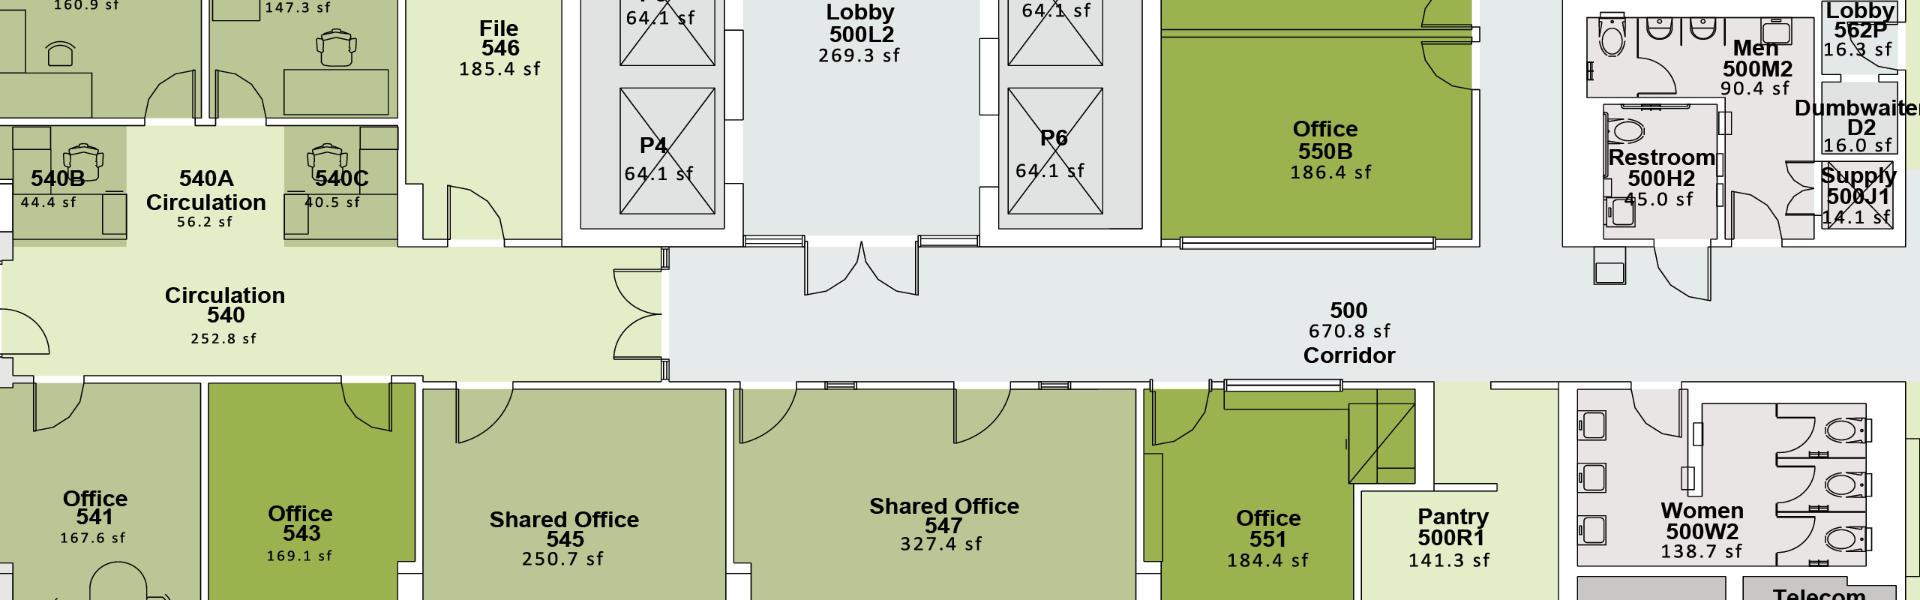 Floor plan with labels